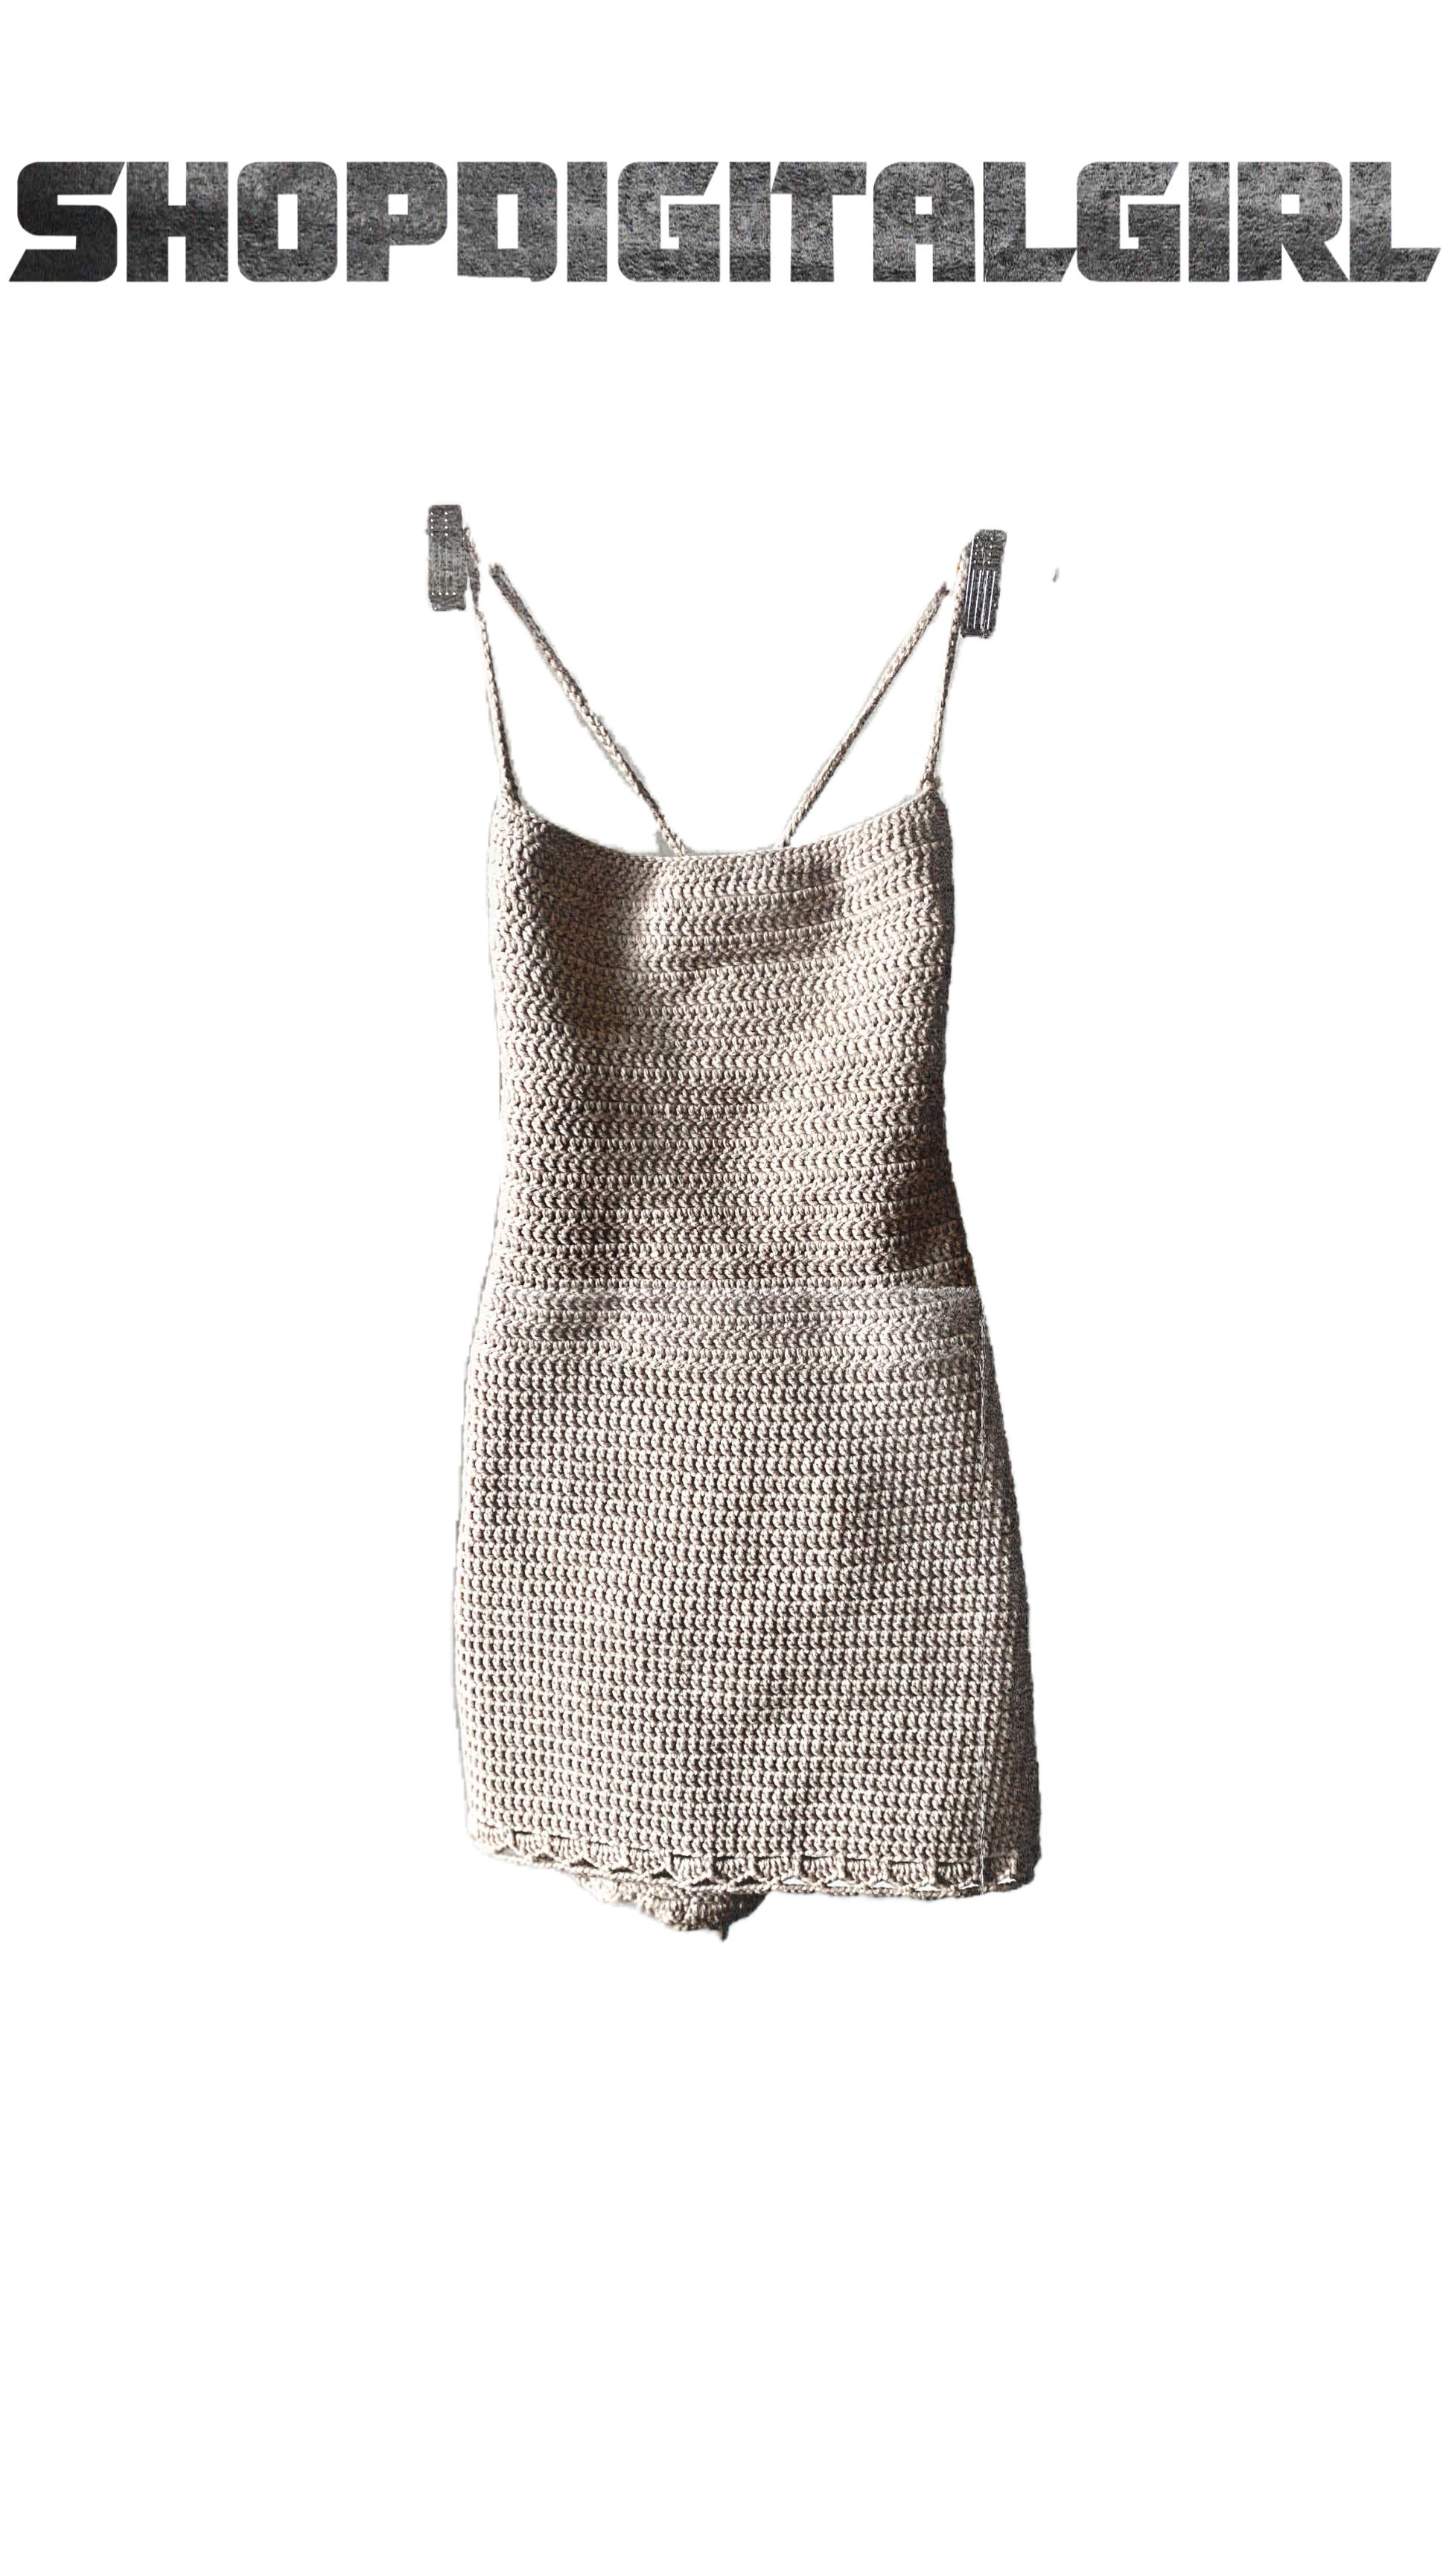 Shopdigitalgirl | Crochet Dresses | Magdalena Dress | Beige